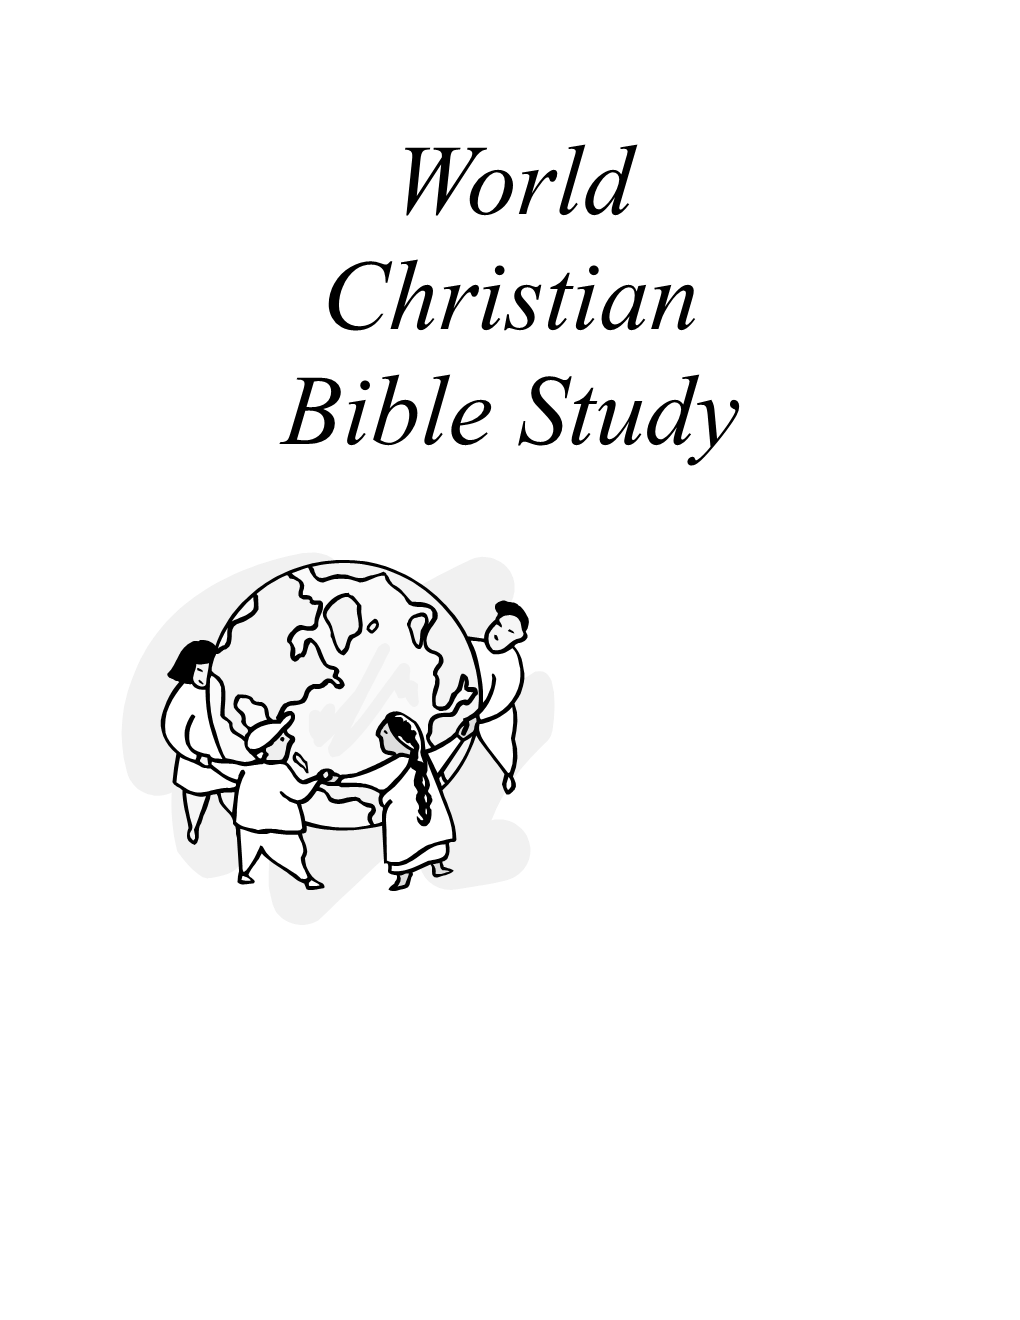 Becoming a World Christian